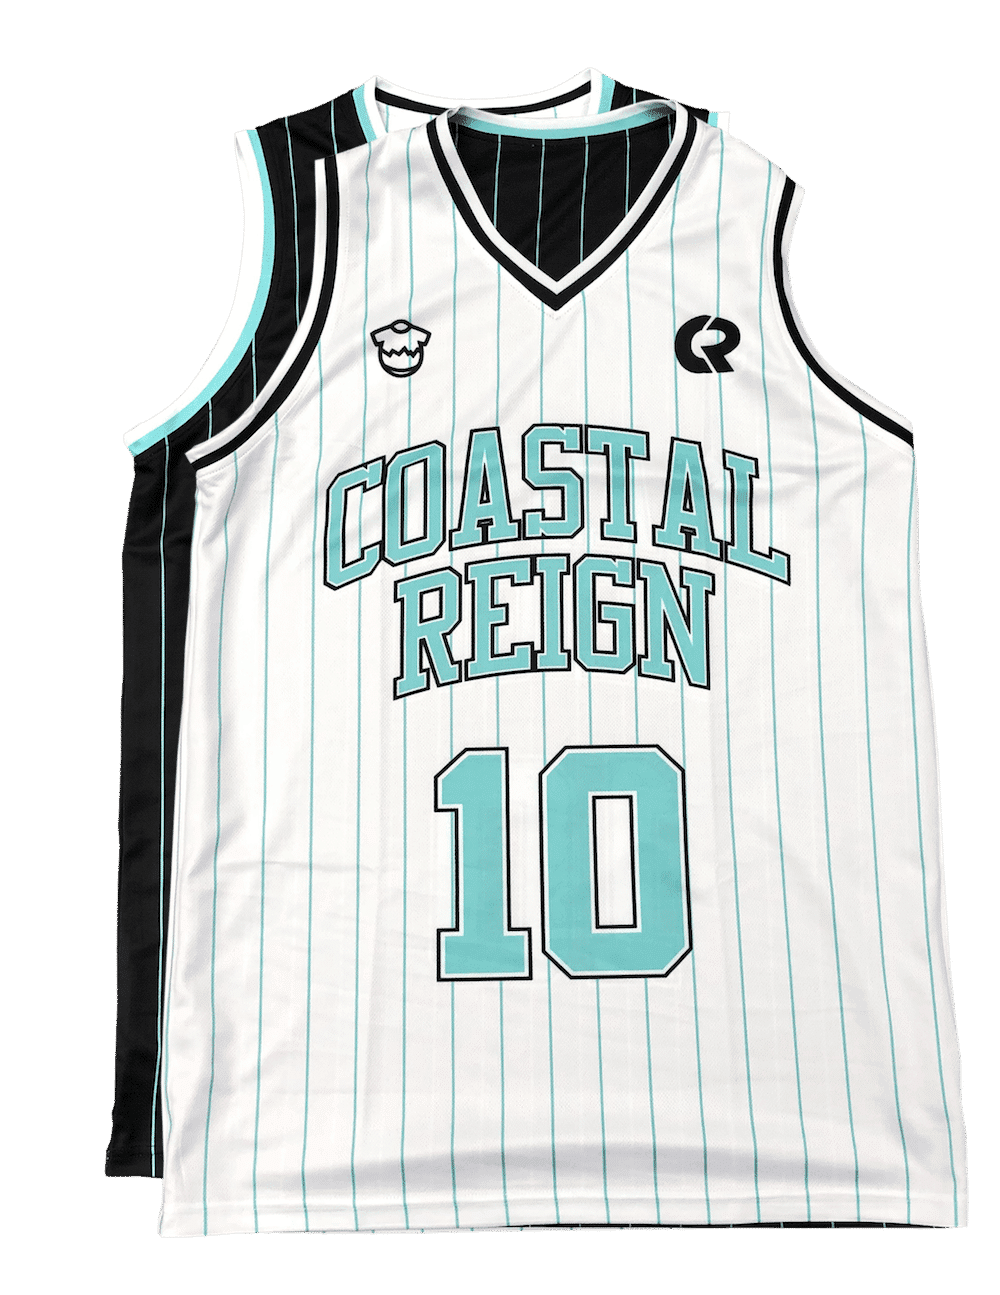 Custom V-Neck Basketball Jersey